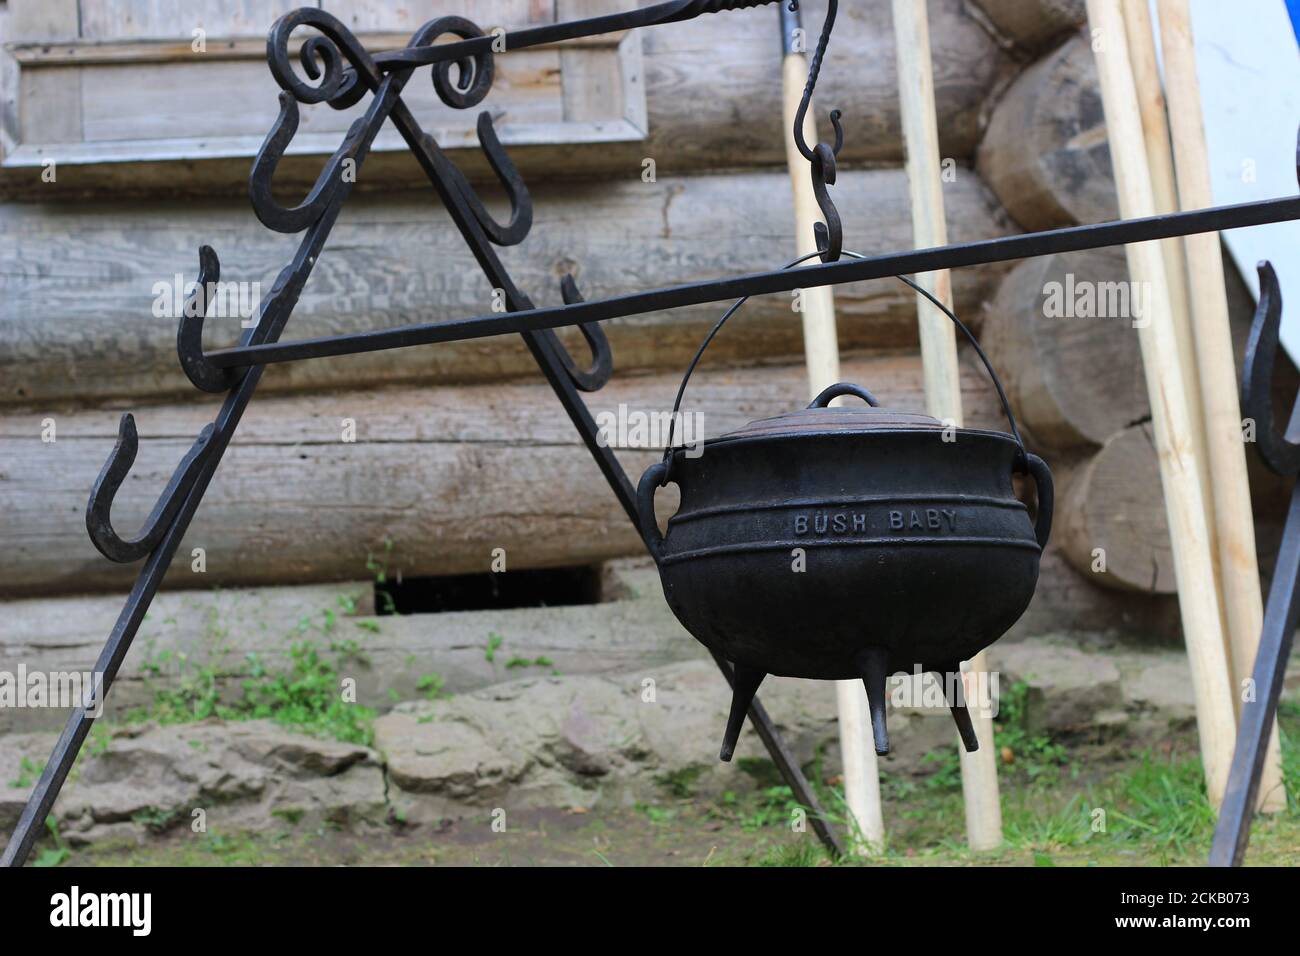 https://c8.alamy.com/comp/2CKB073/hiking-kitchen-cast-iron-pot-on-the-stand-2CKB073.jpg